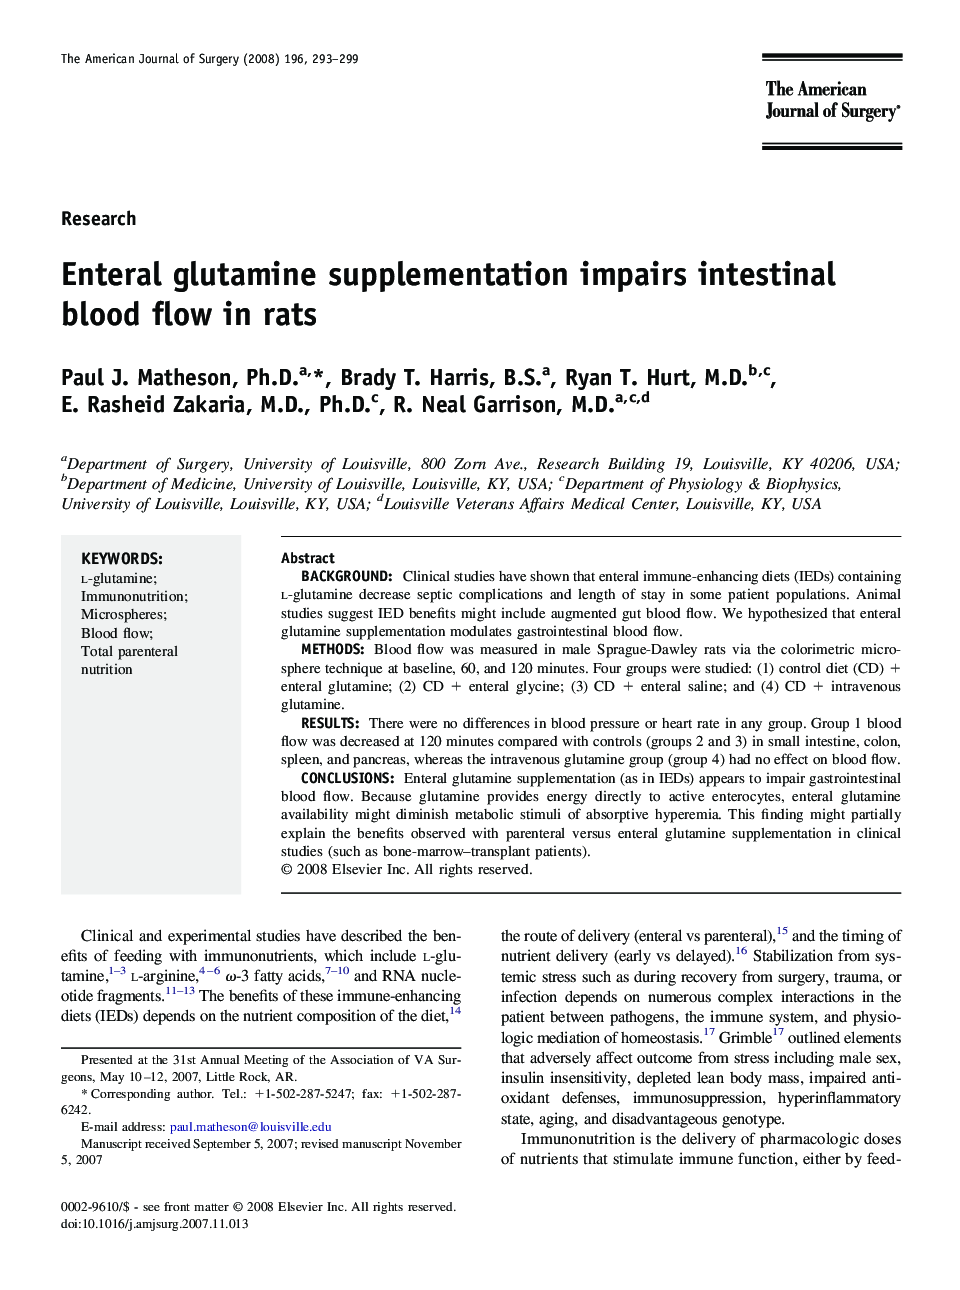 Enteral glutamine supplementation impairs intestinal blood flow in rats